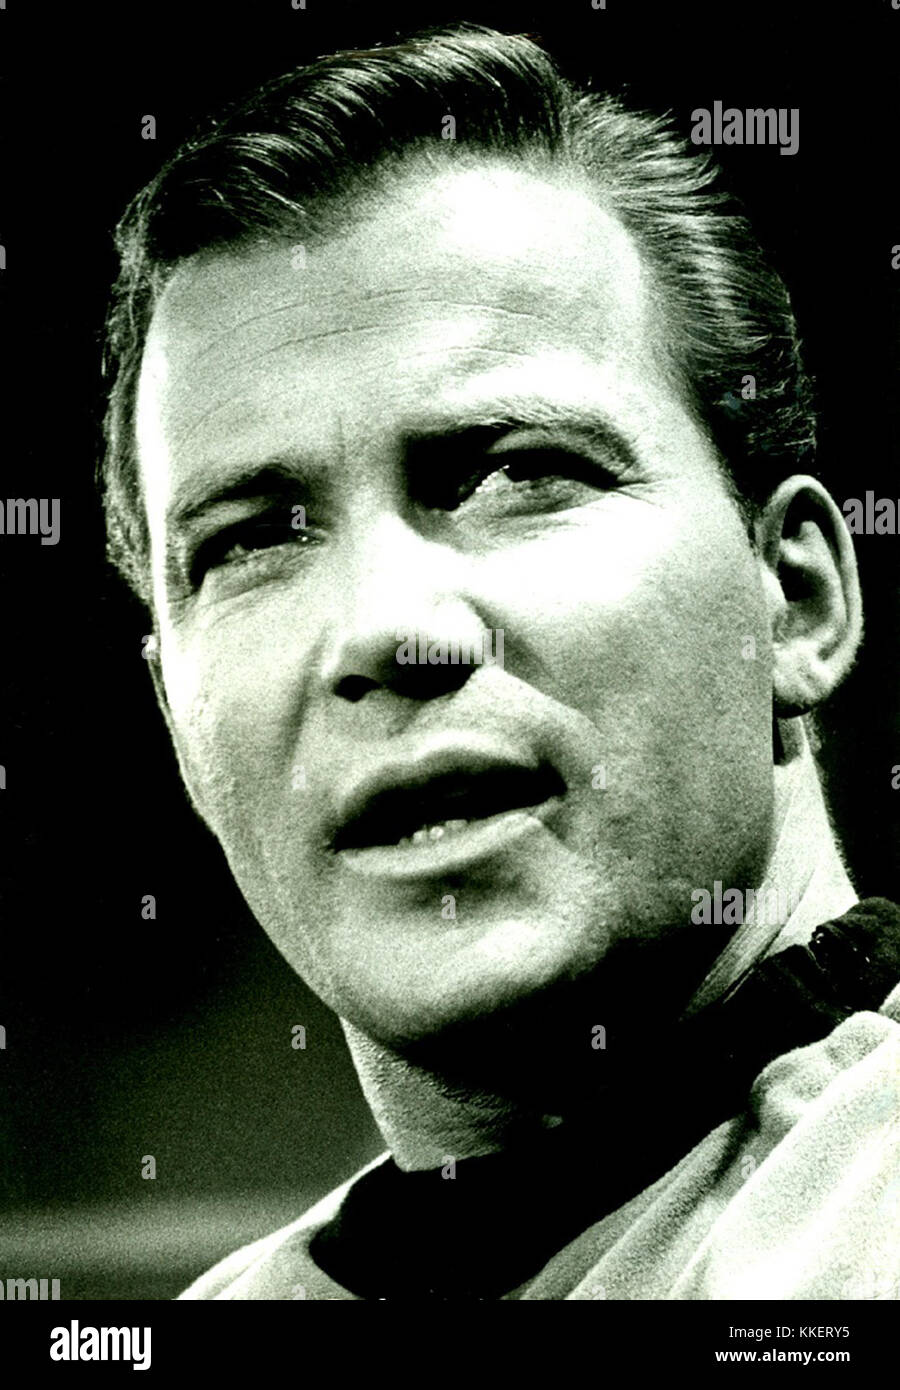 1966 Original Press Photo William Shatner as Captain Kirk in Star Trek B4 Show Stock Photo